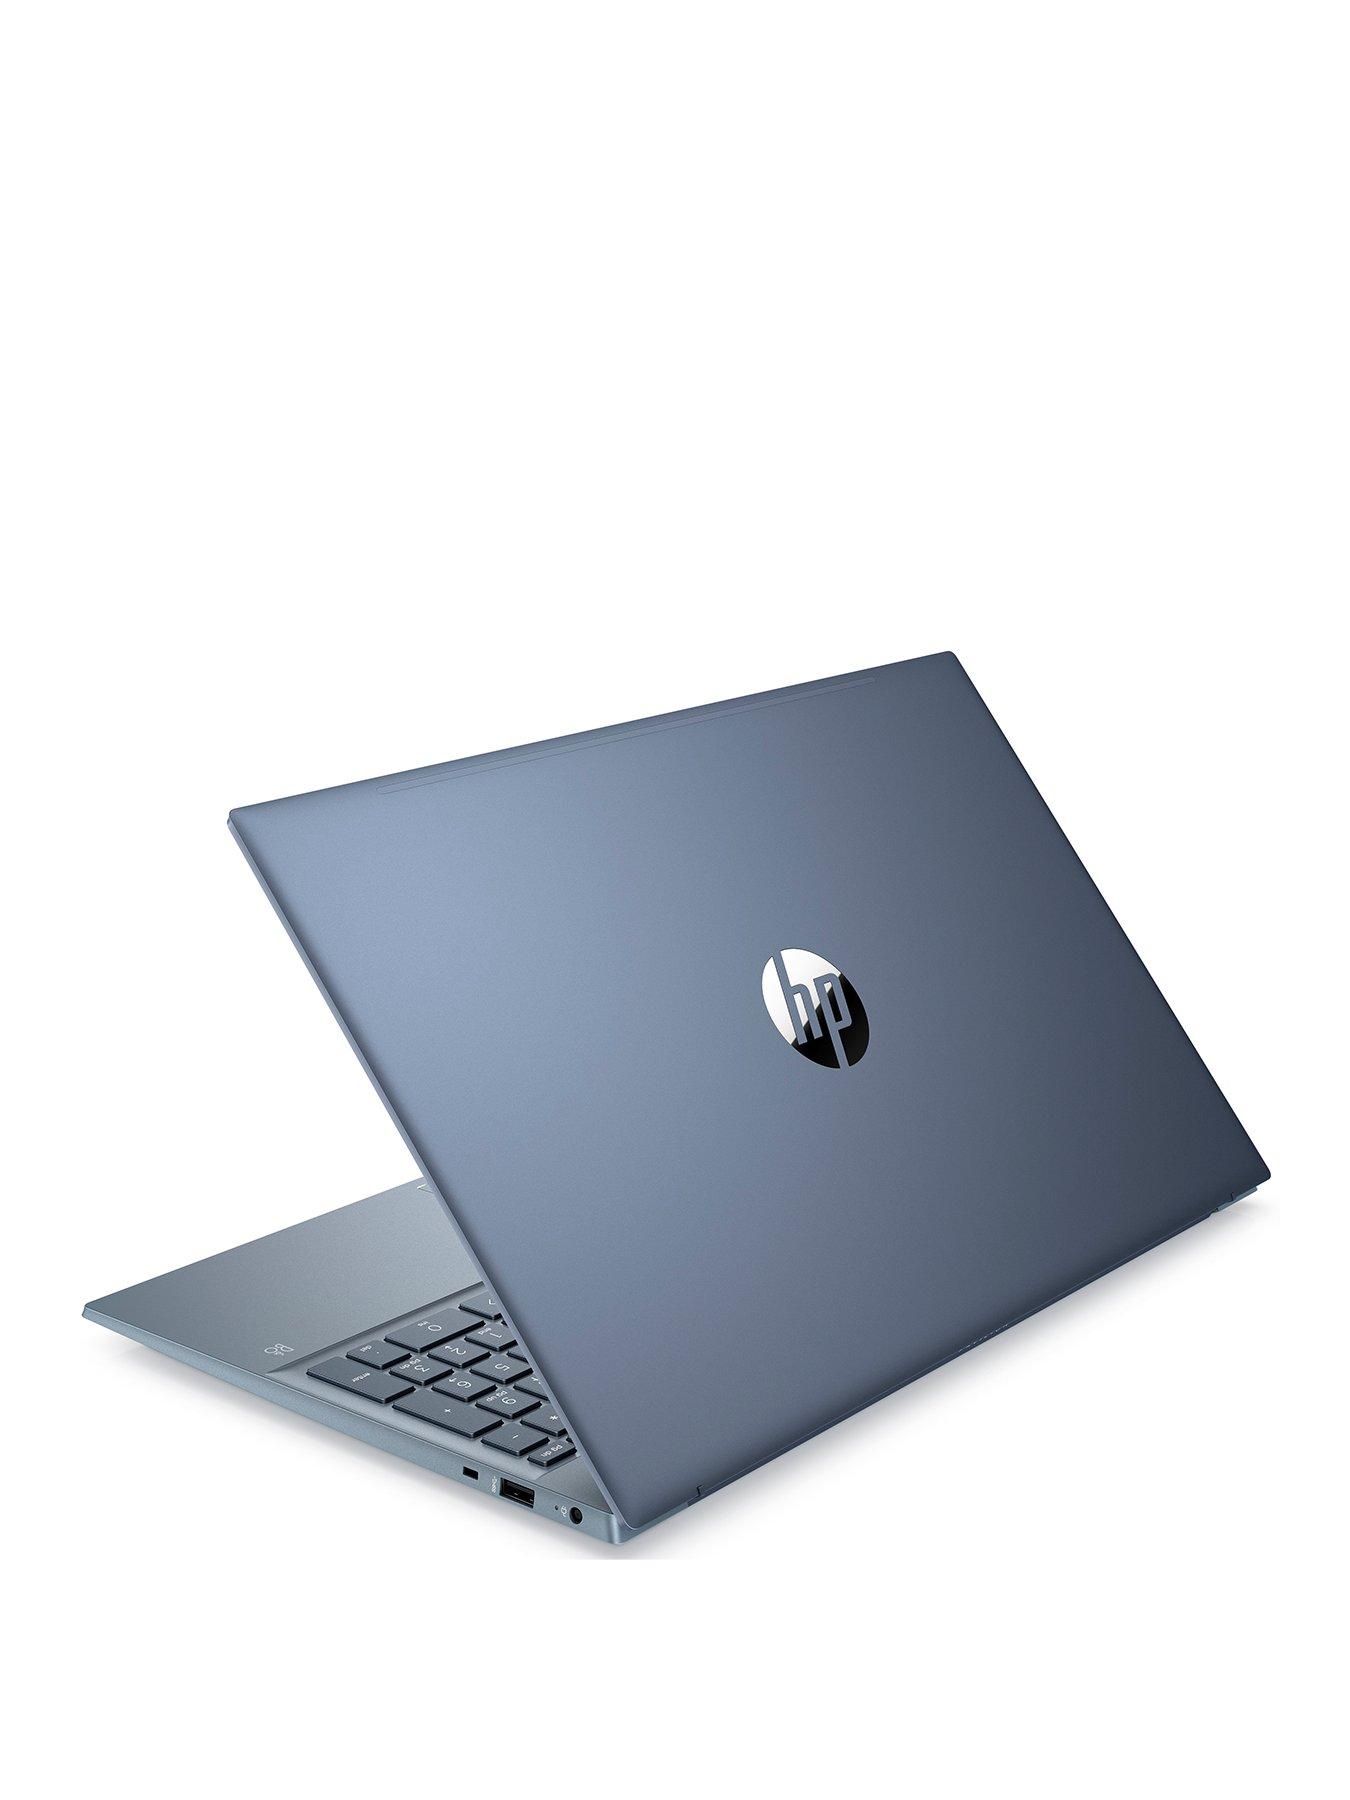 PC portable HP - Ordinateur Core i5 & SSD - Administration & Ecole